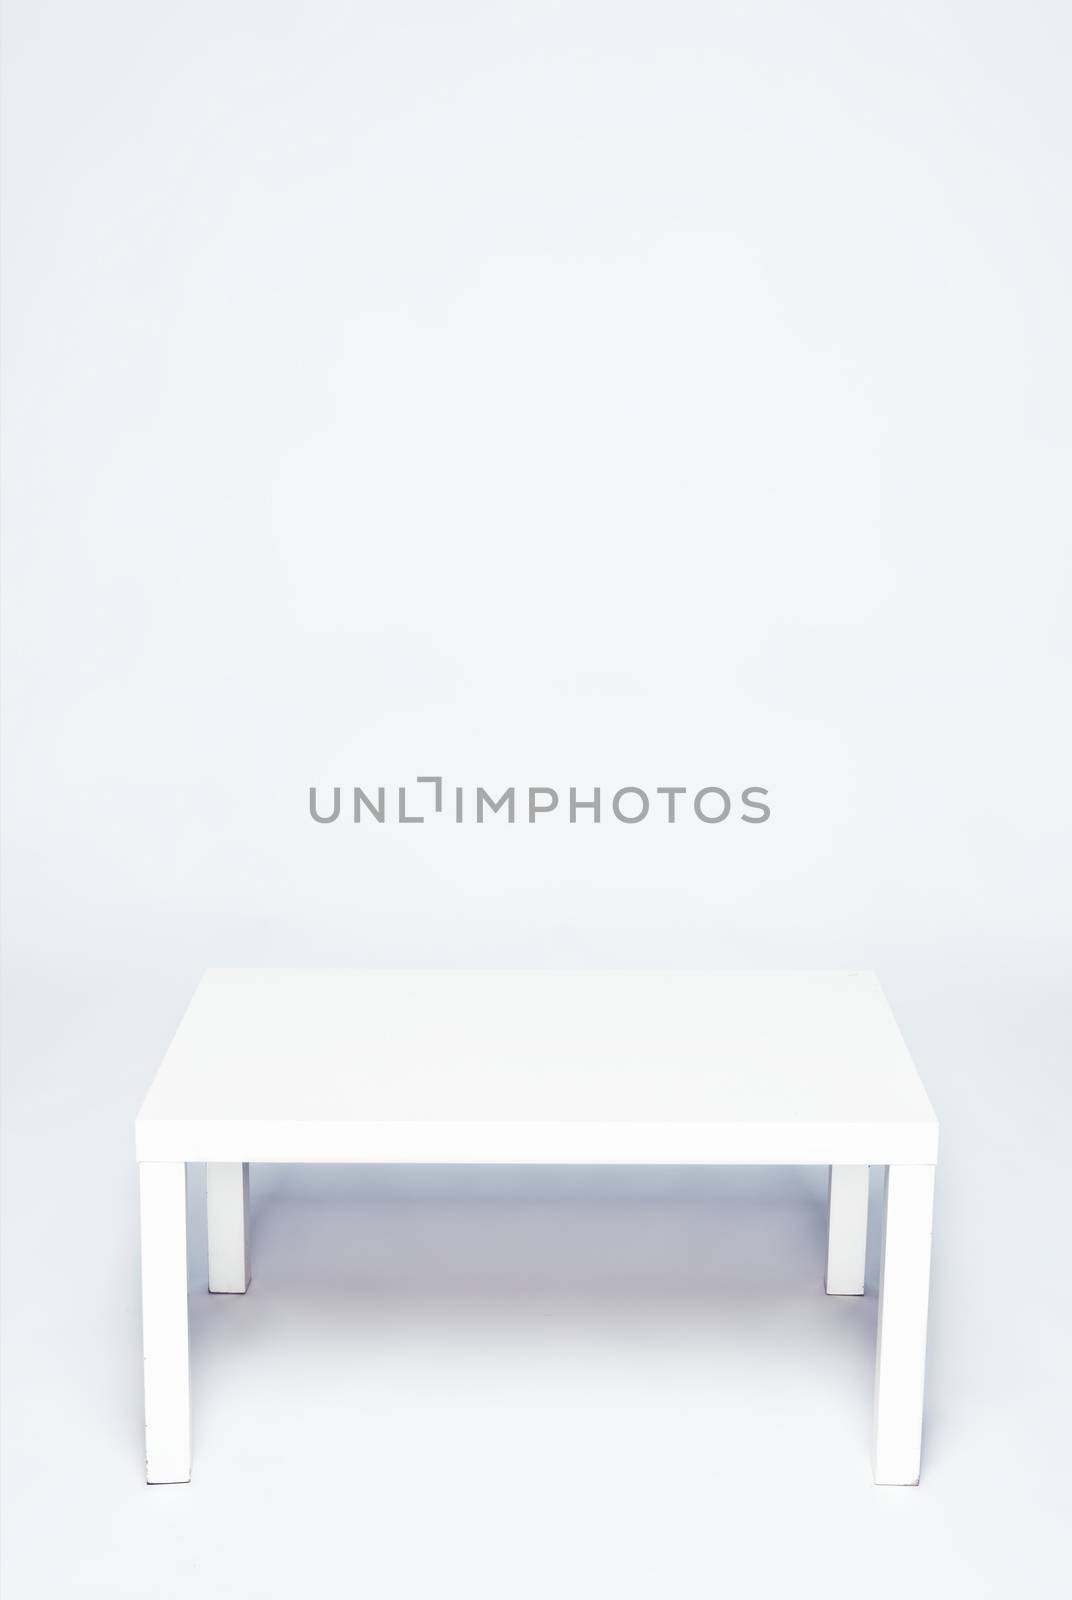 white table on a white background. photo